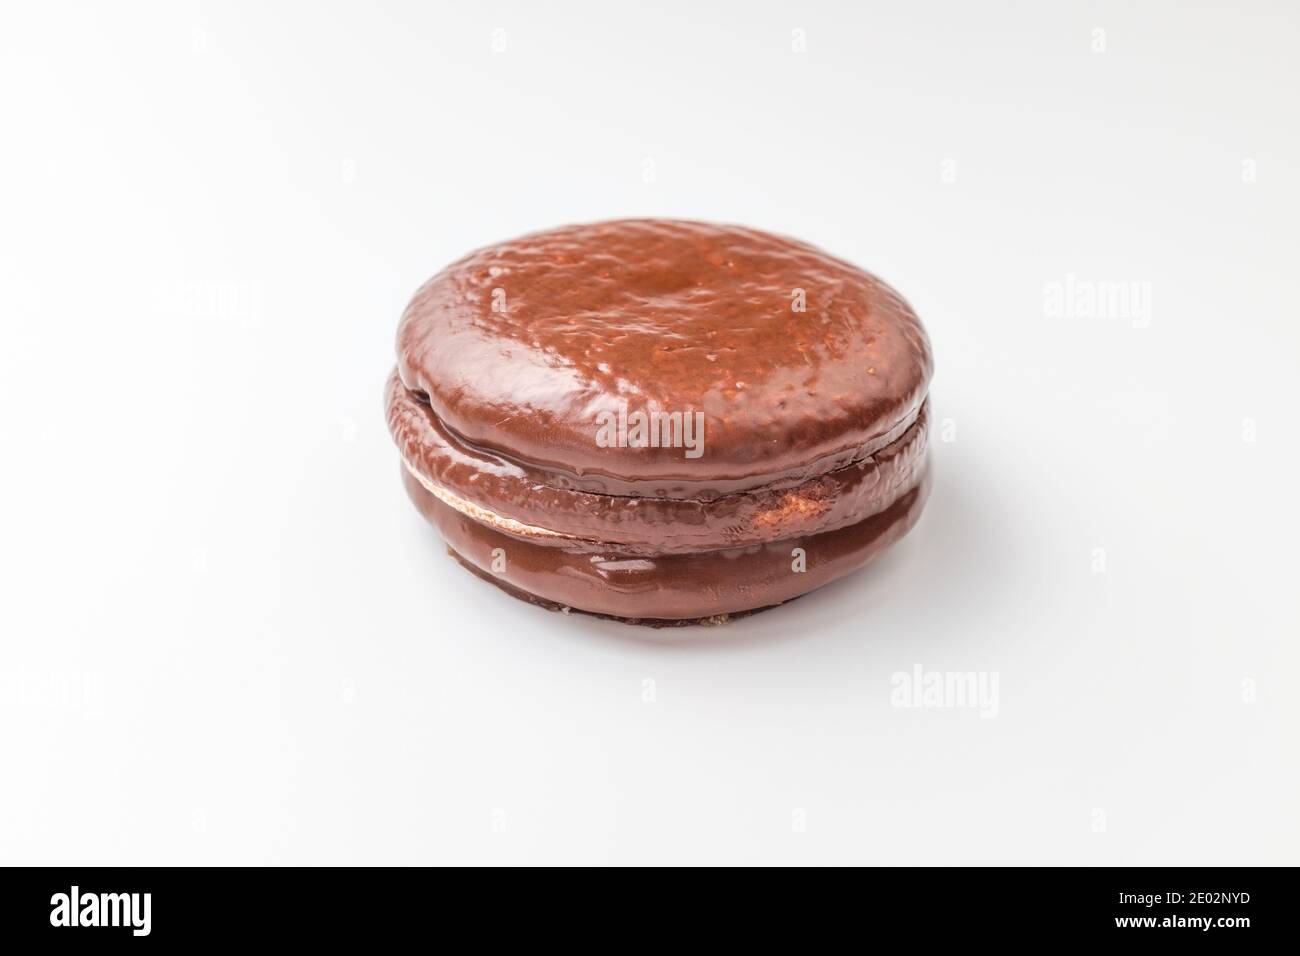 Chocolate pie on white background Stock Photo